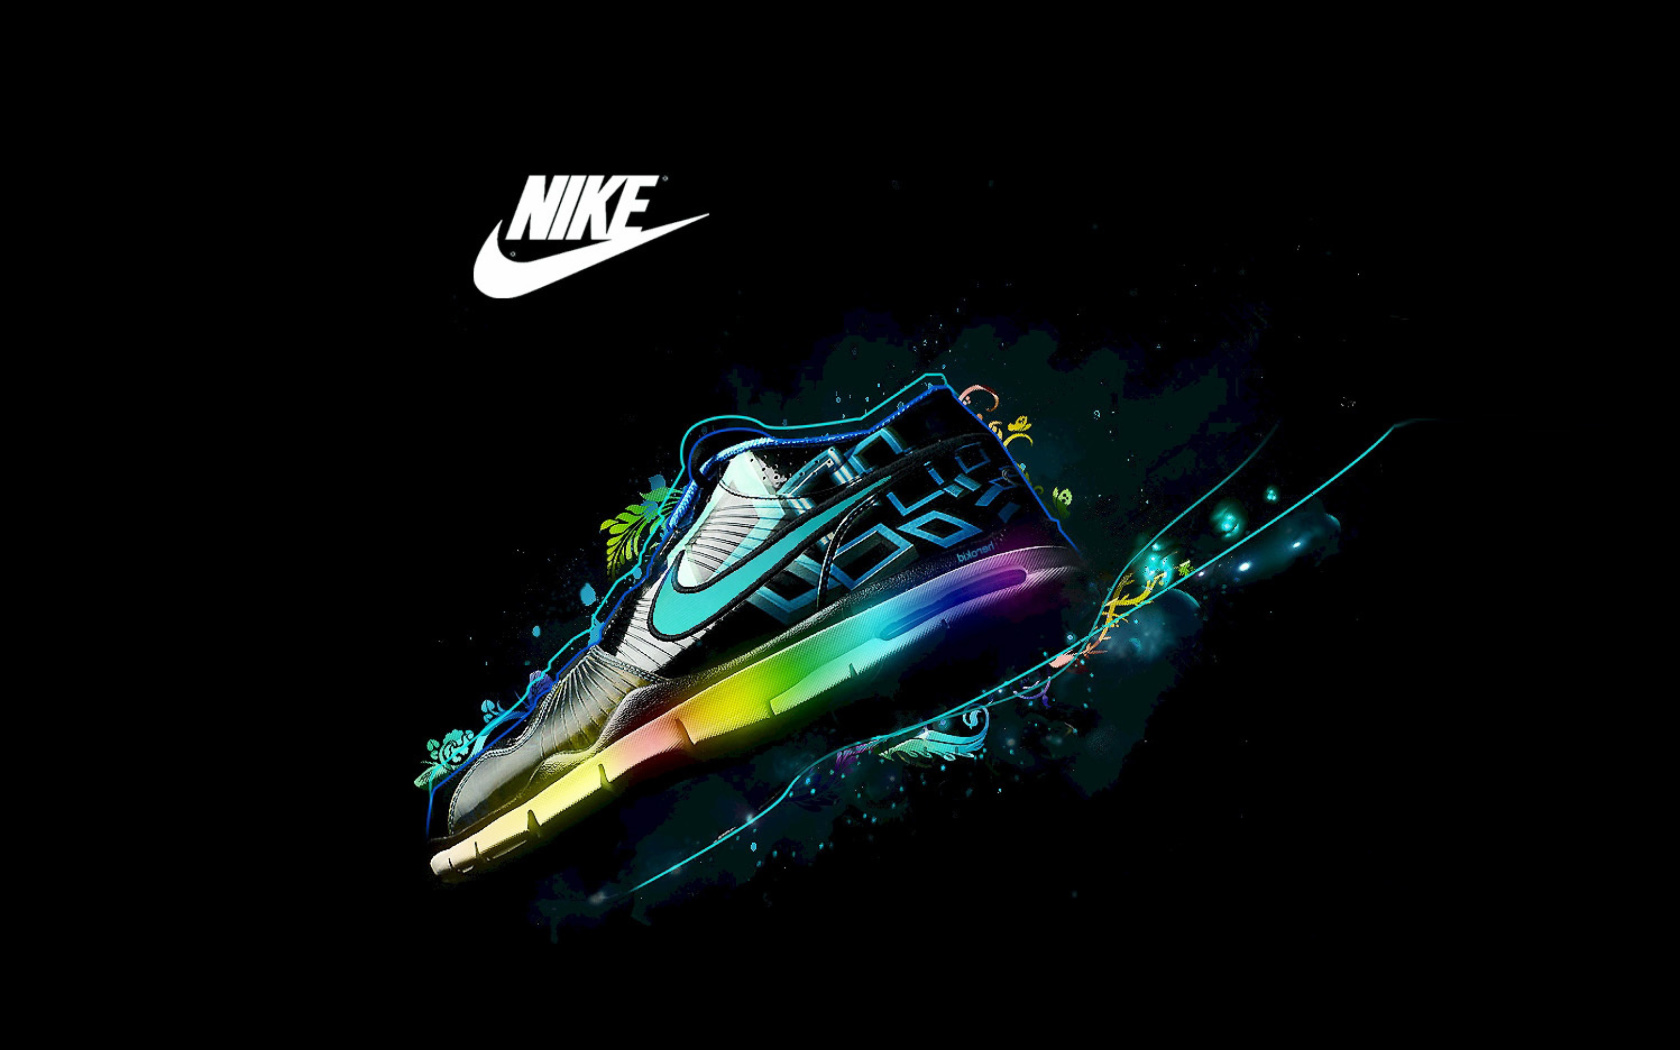 Nike Logo and Nike Air Shoes wallpaper 1680x1050